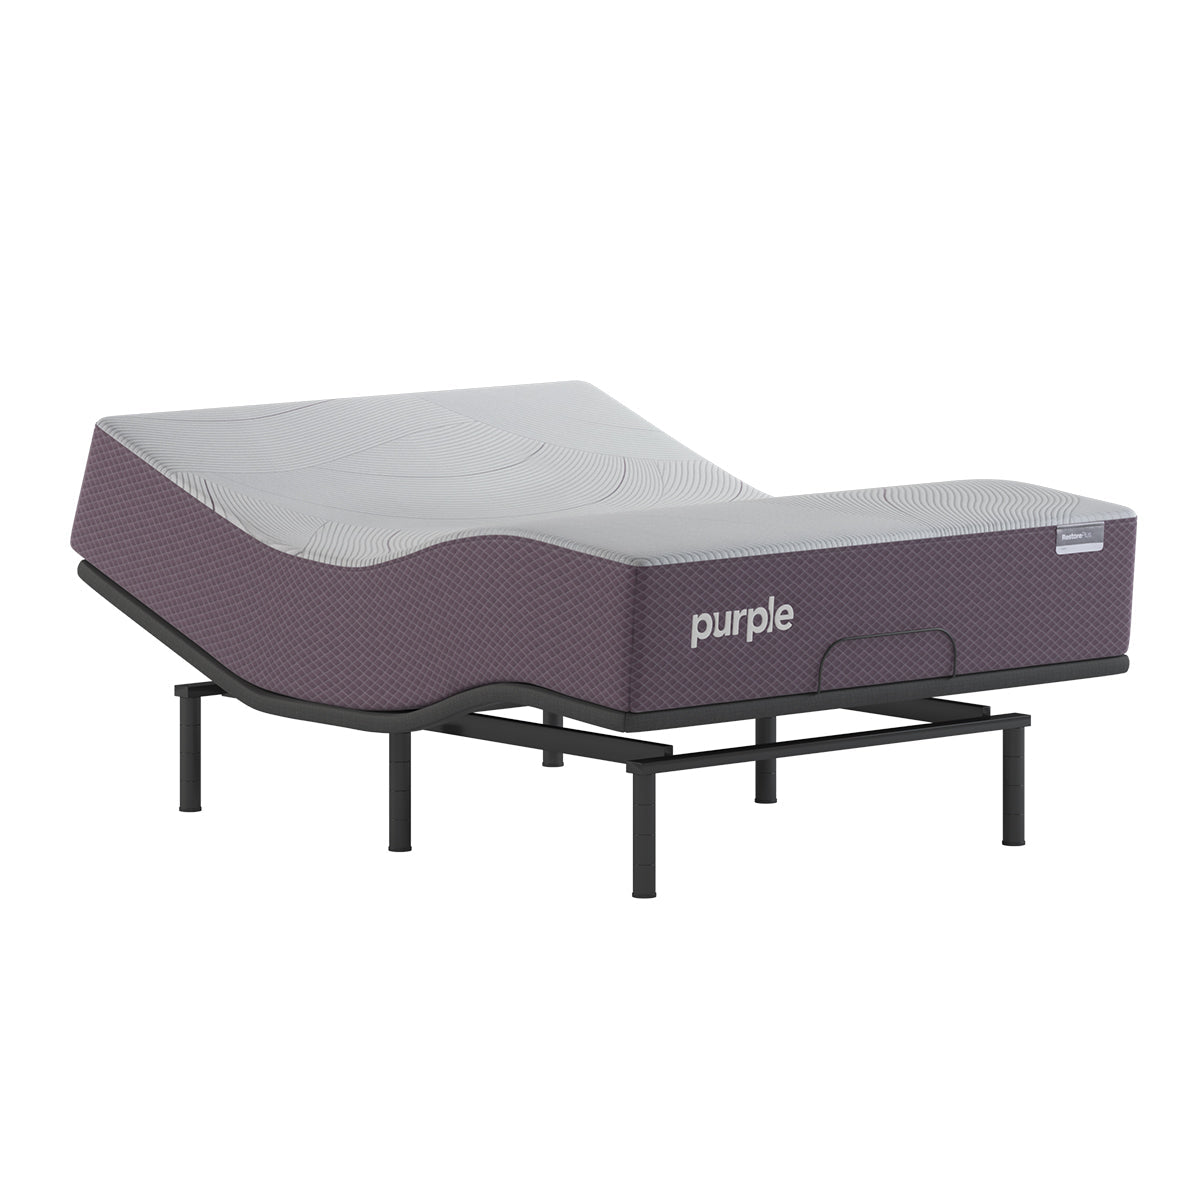 Purple Restore Plus Soft Mattress on adjustable base